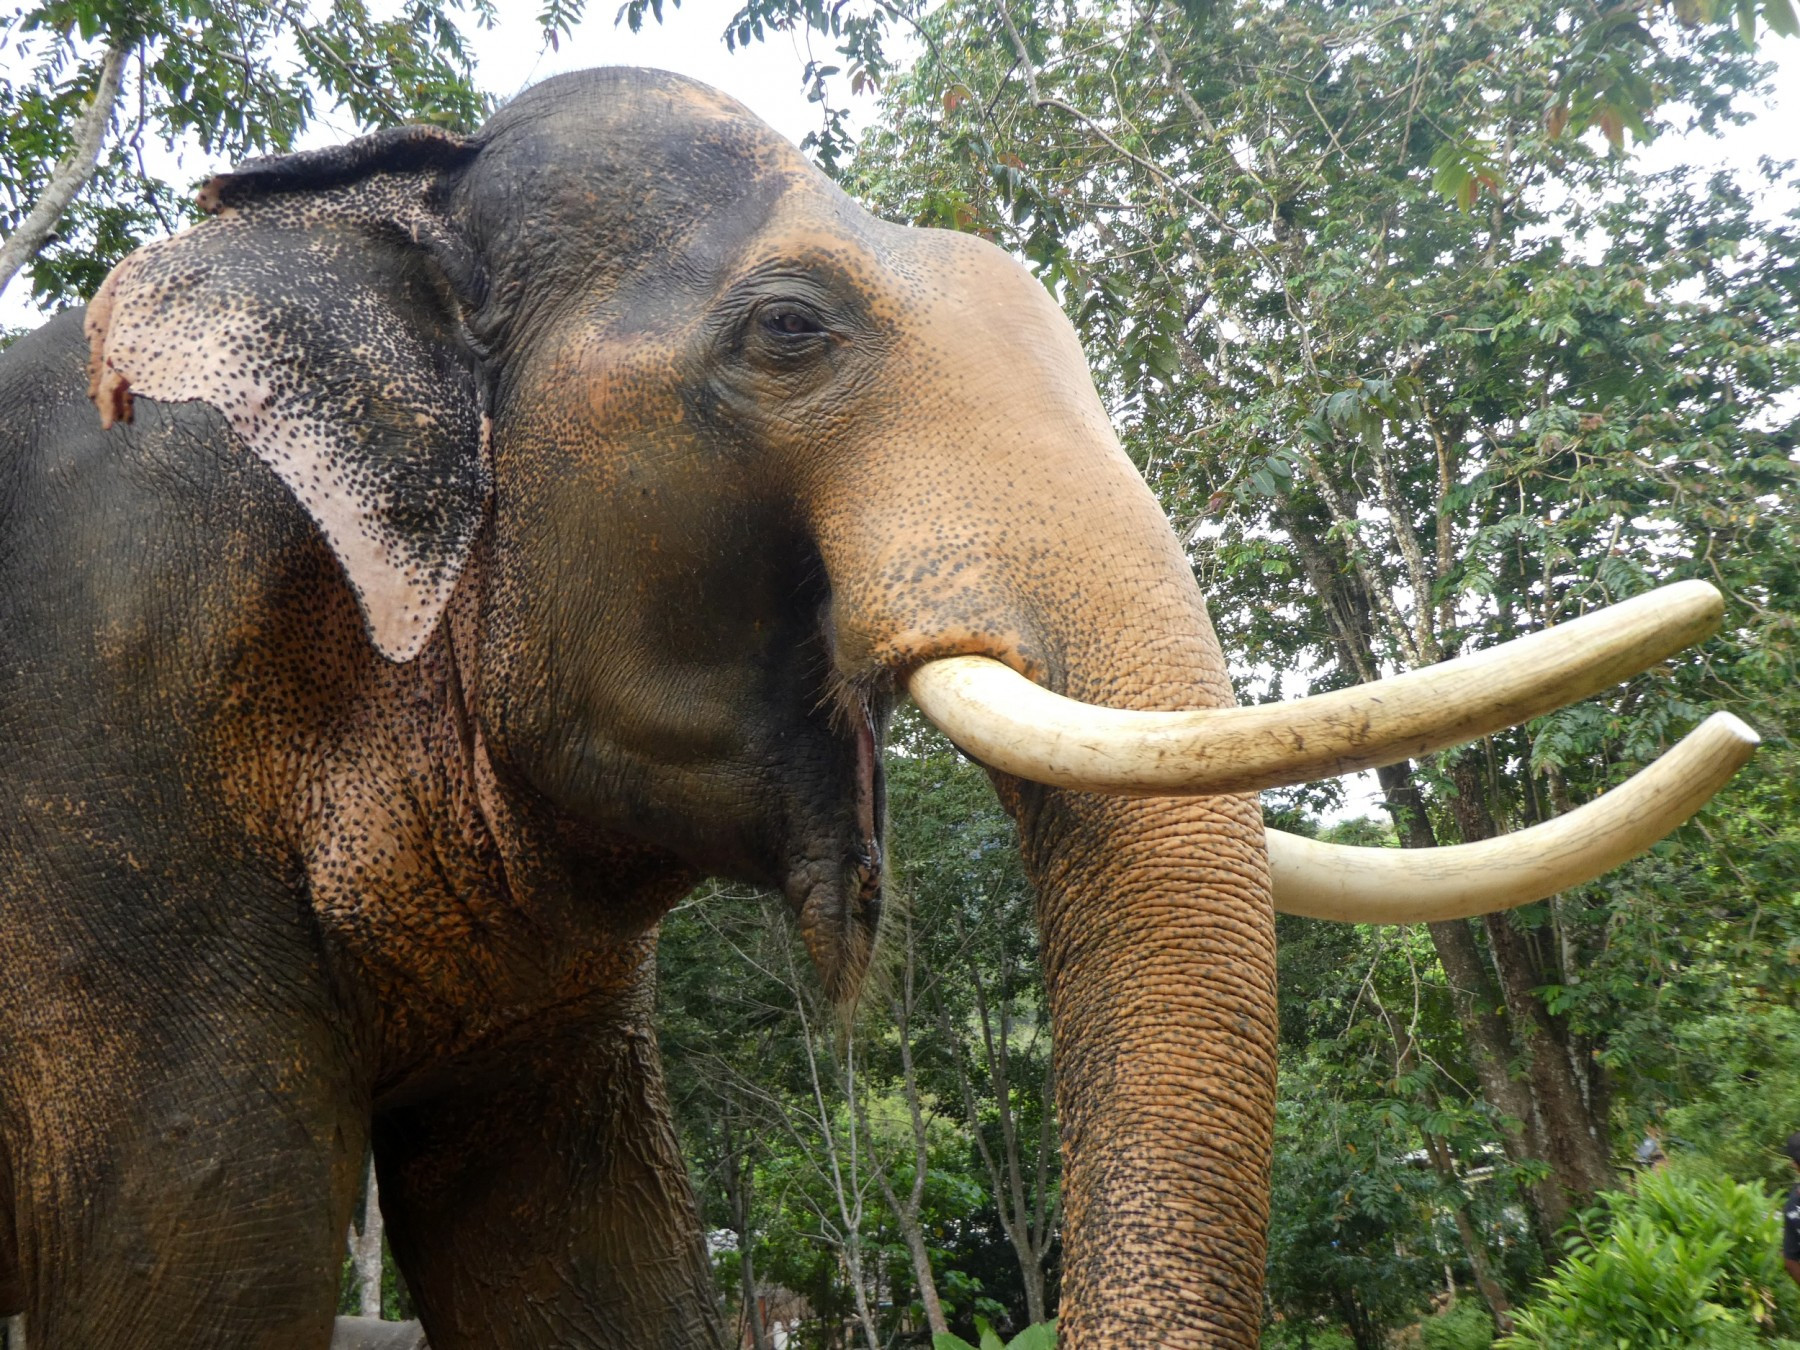 Elephant at high welfare venue in Koh Lanta, Thailand - World Animal Protection